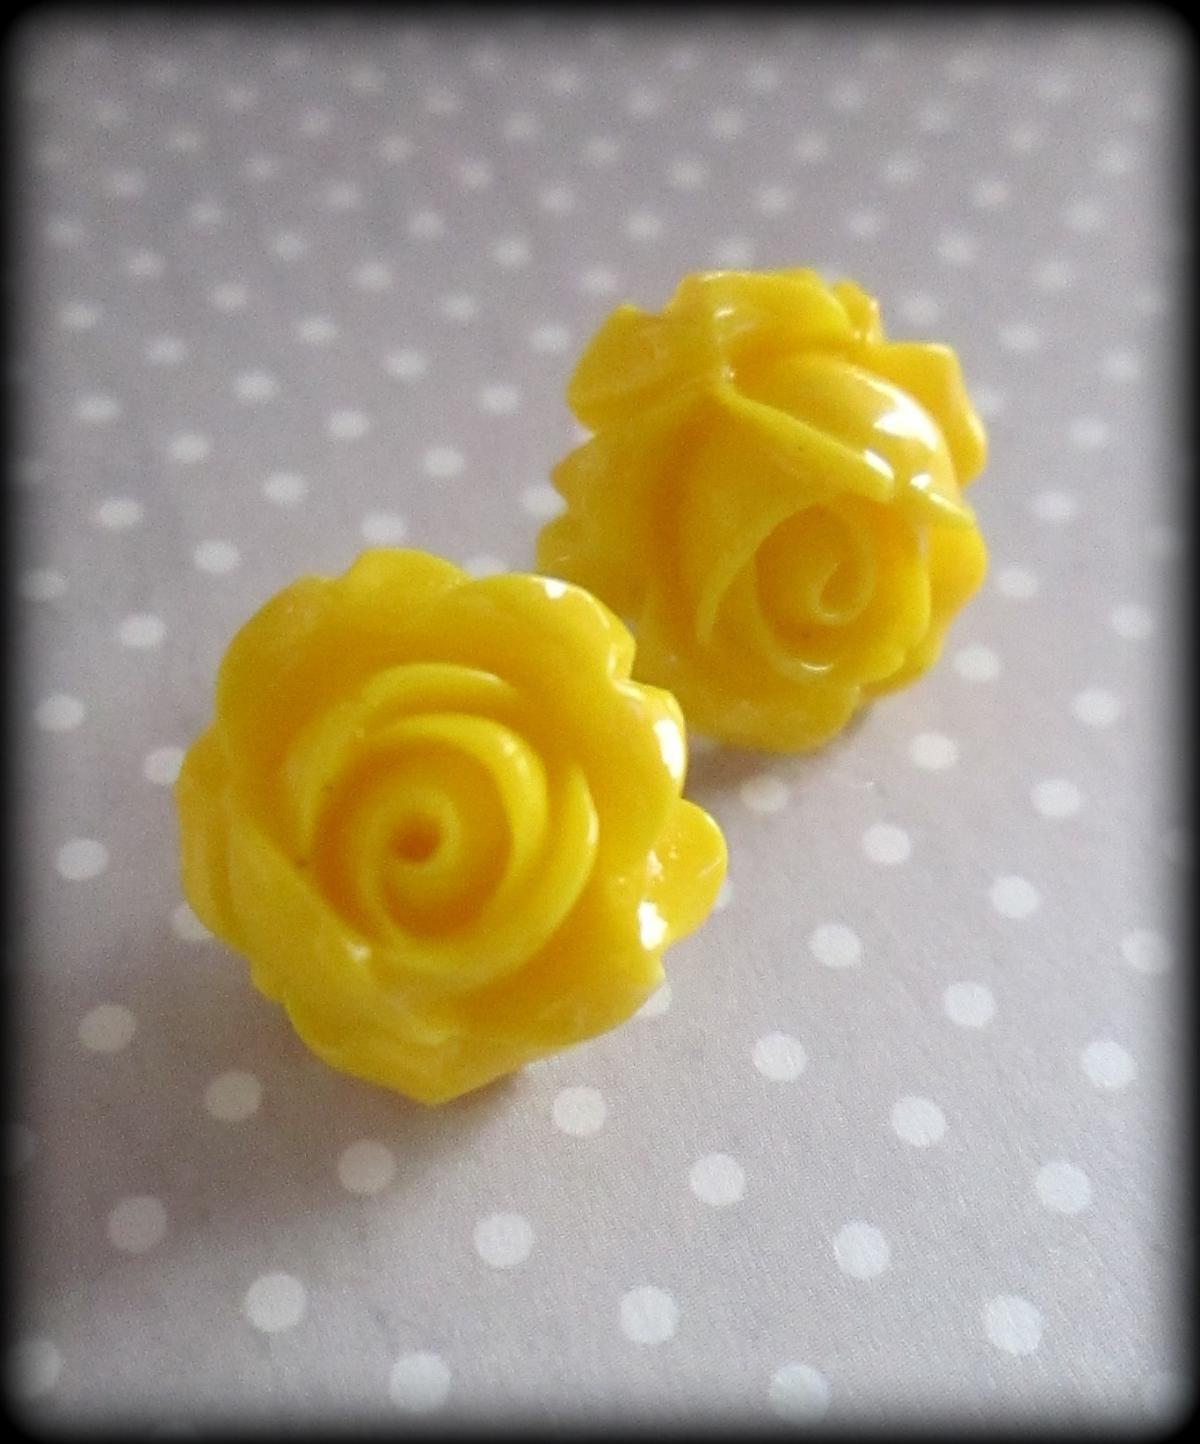 Sunshine Yellow Rose Post Earrings.